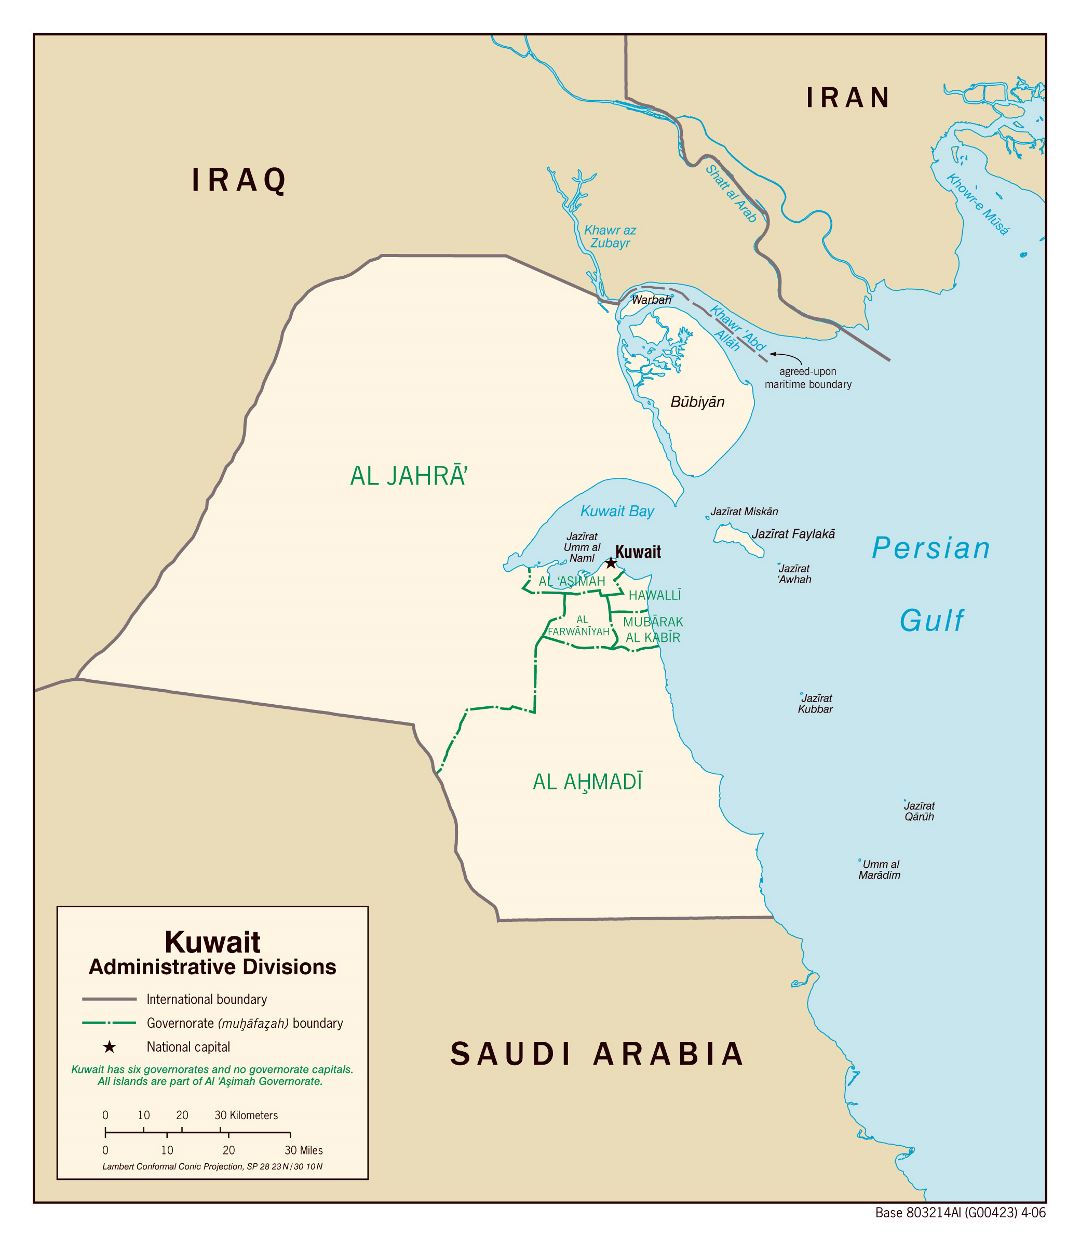 Grande mapa de administrativas divisiones de Kuwait - 2006